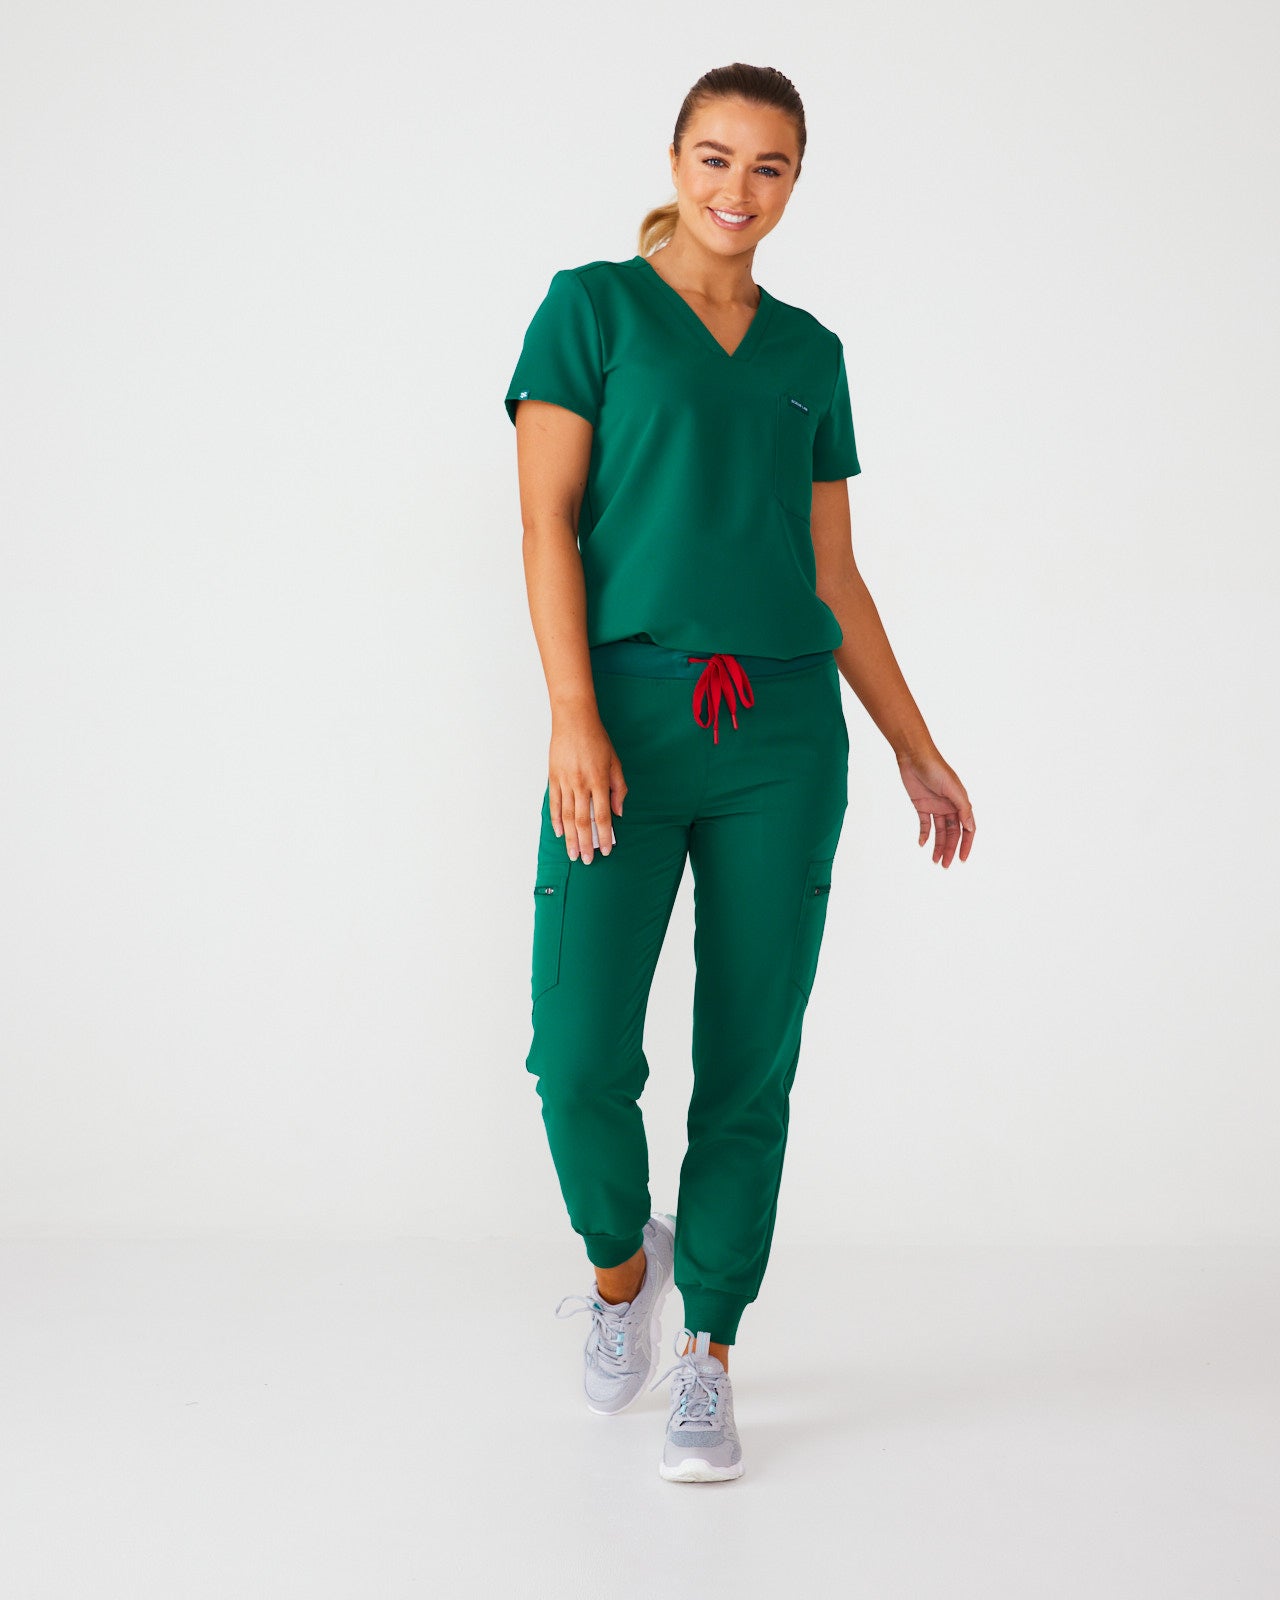 Ultra-Soft Scrubs and Nursing Uniforms for Women – Page 8 – Scrub Lab ...